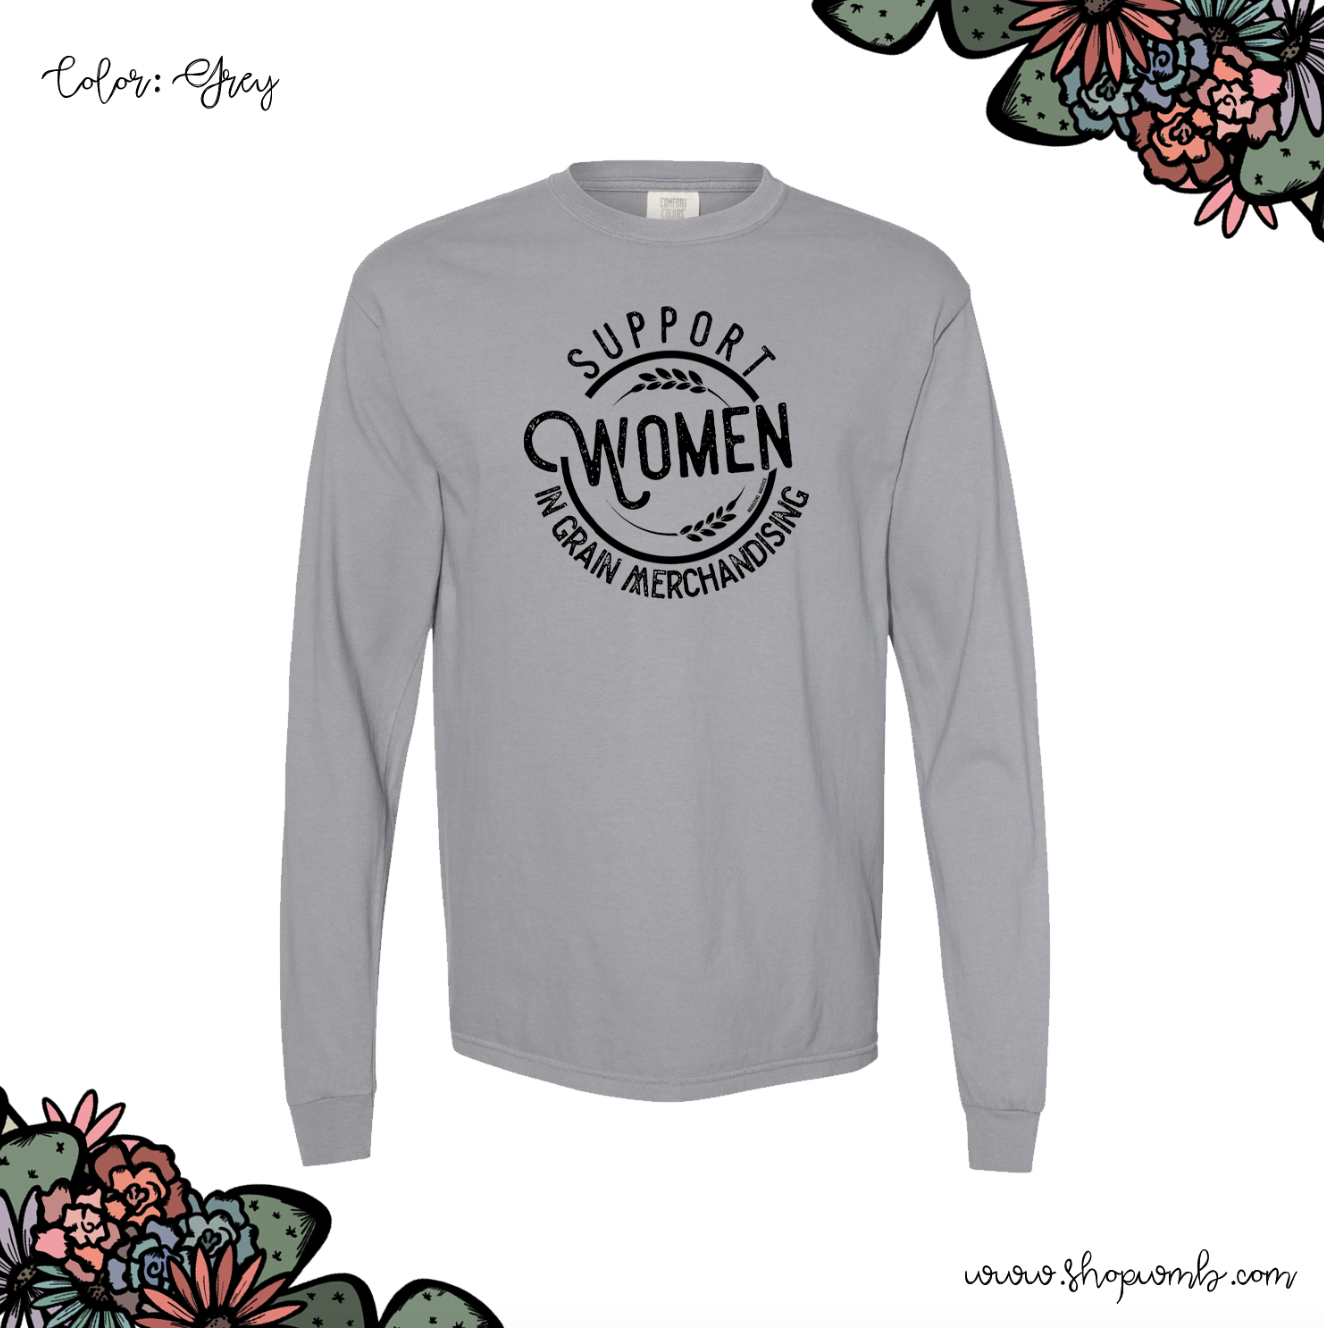 Support Women In Grain Merchandising LONG SLEEVE T-Shirt (S-3XL) - Multiple Colors!